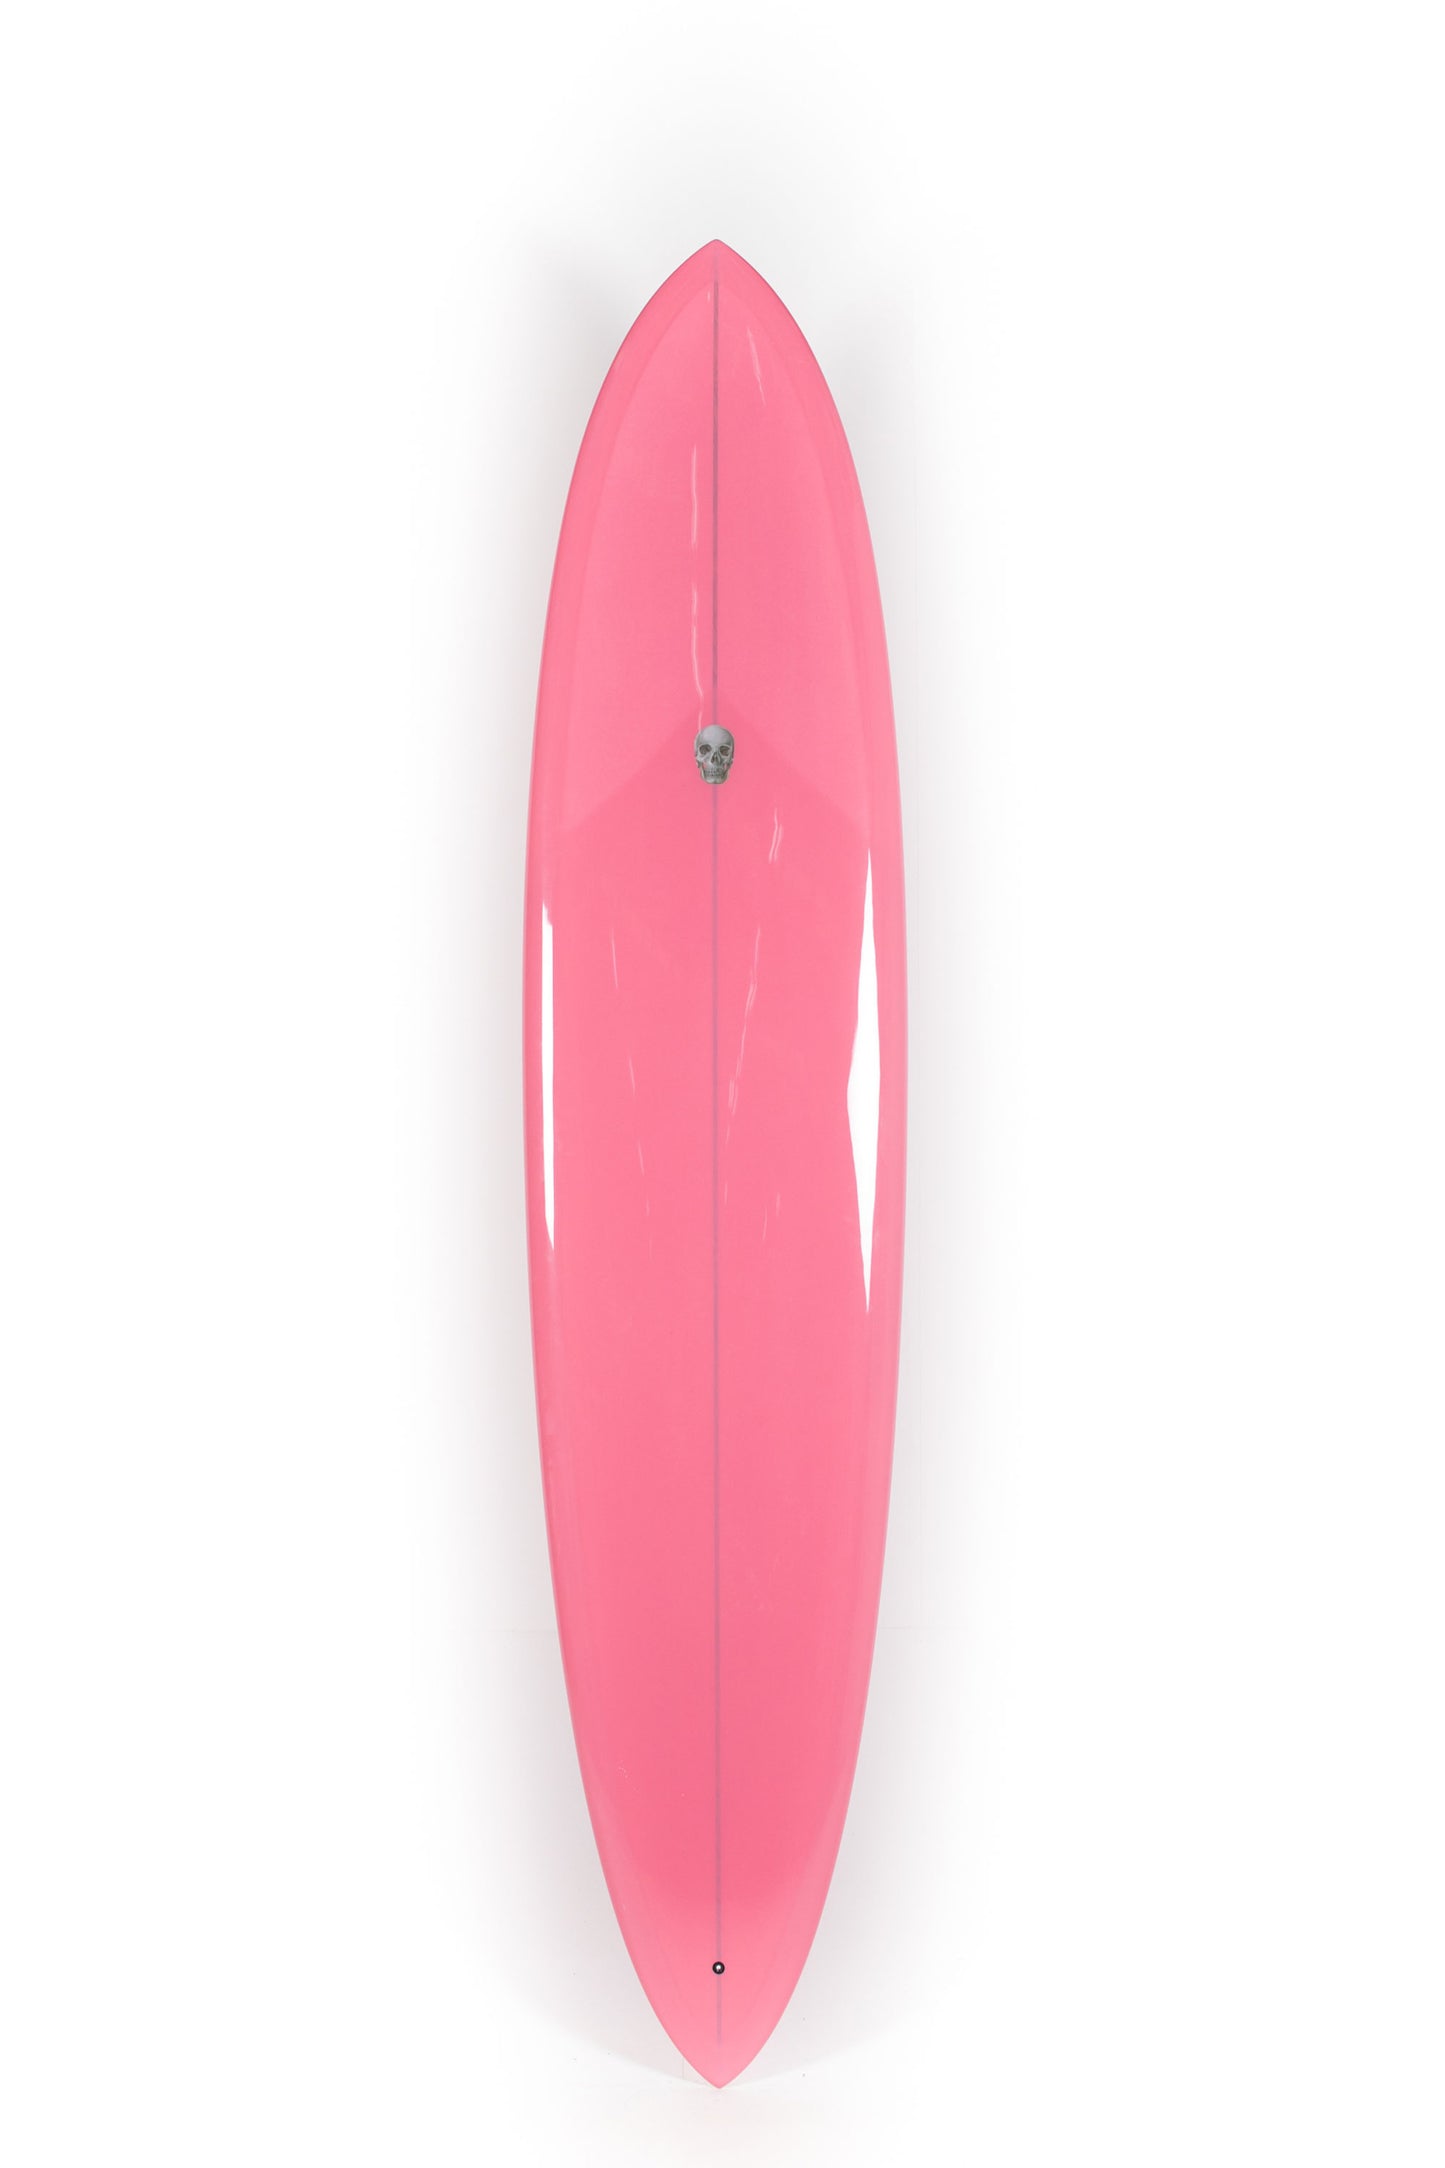 Pukas Surf Shop - Christenson Surfboards - C-BUCKET - 8'6" x 21 1/2 x 2 7/8 - CX05024